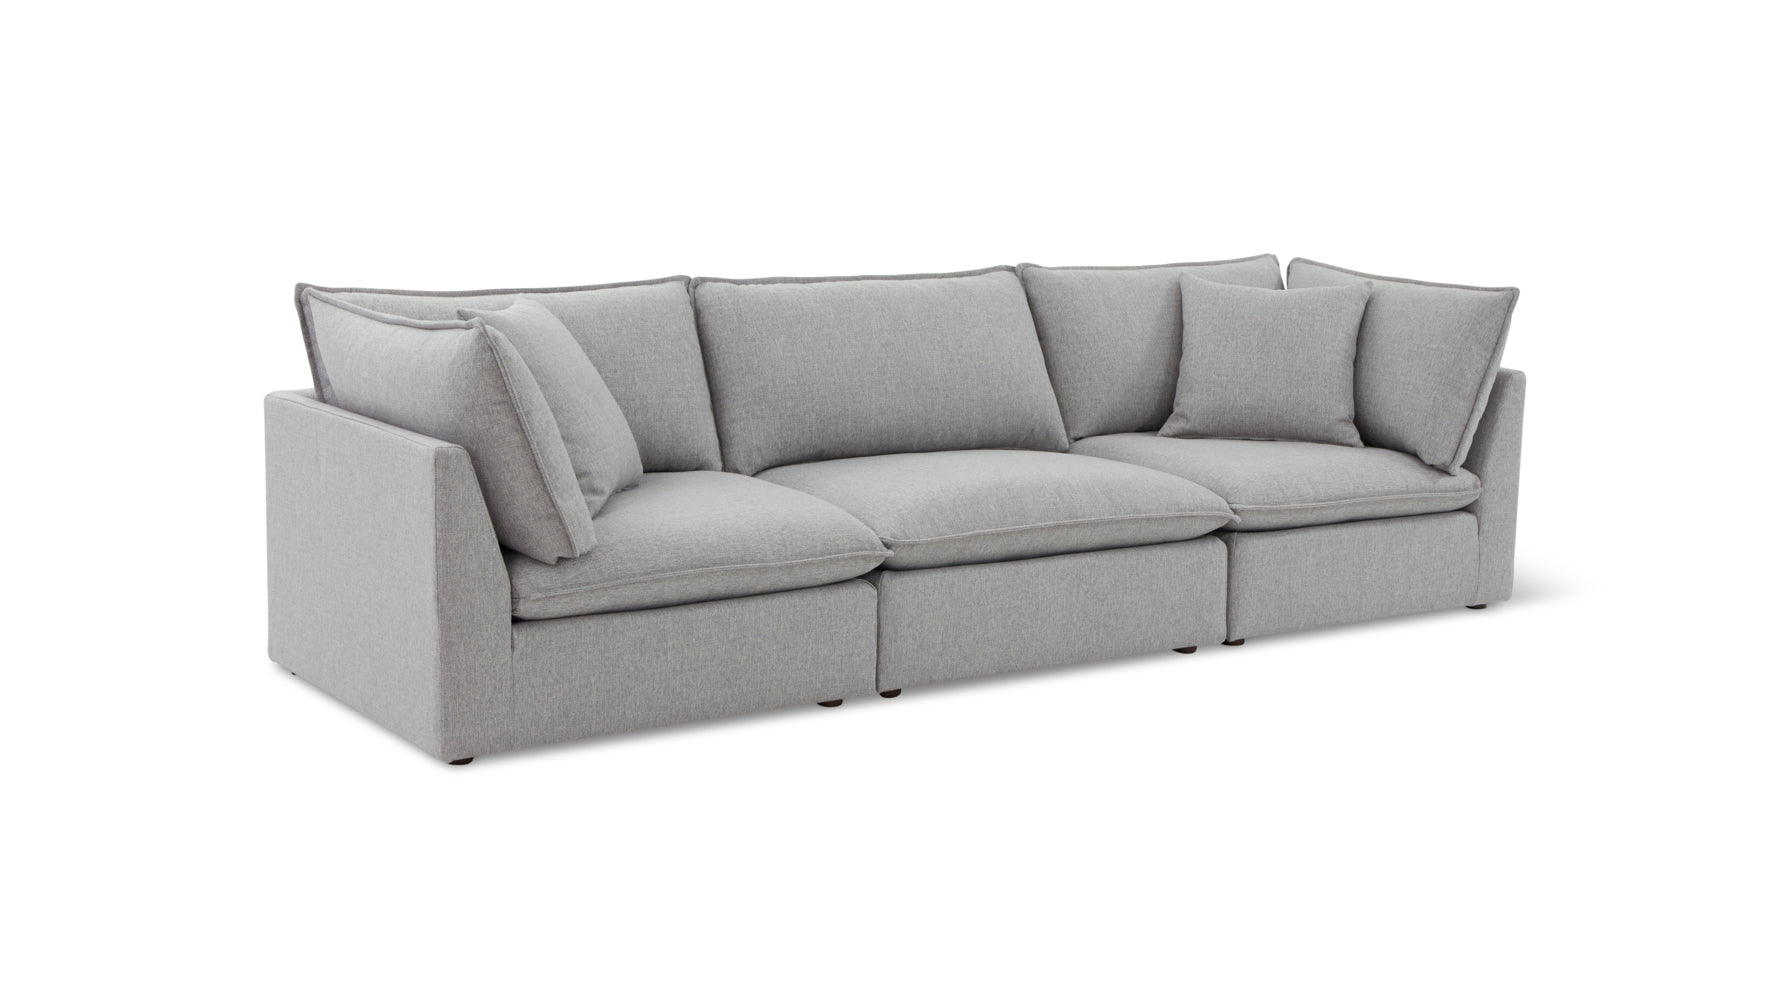 Chill Time 3-Piece Modular Sofa, Heather - Image 2